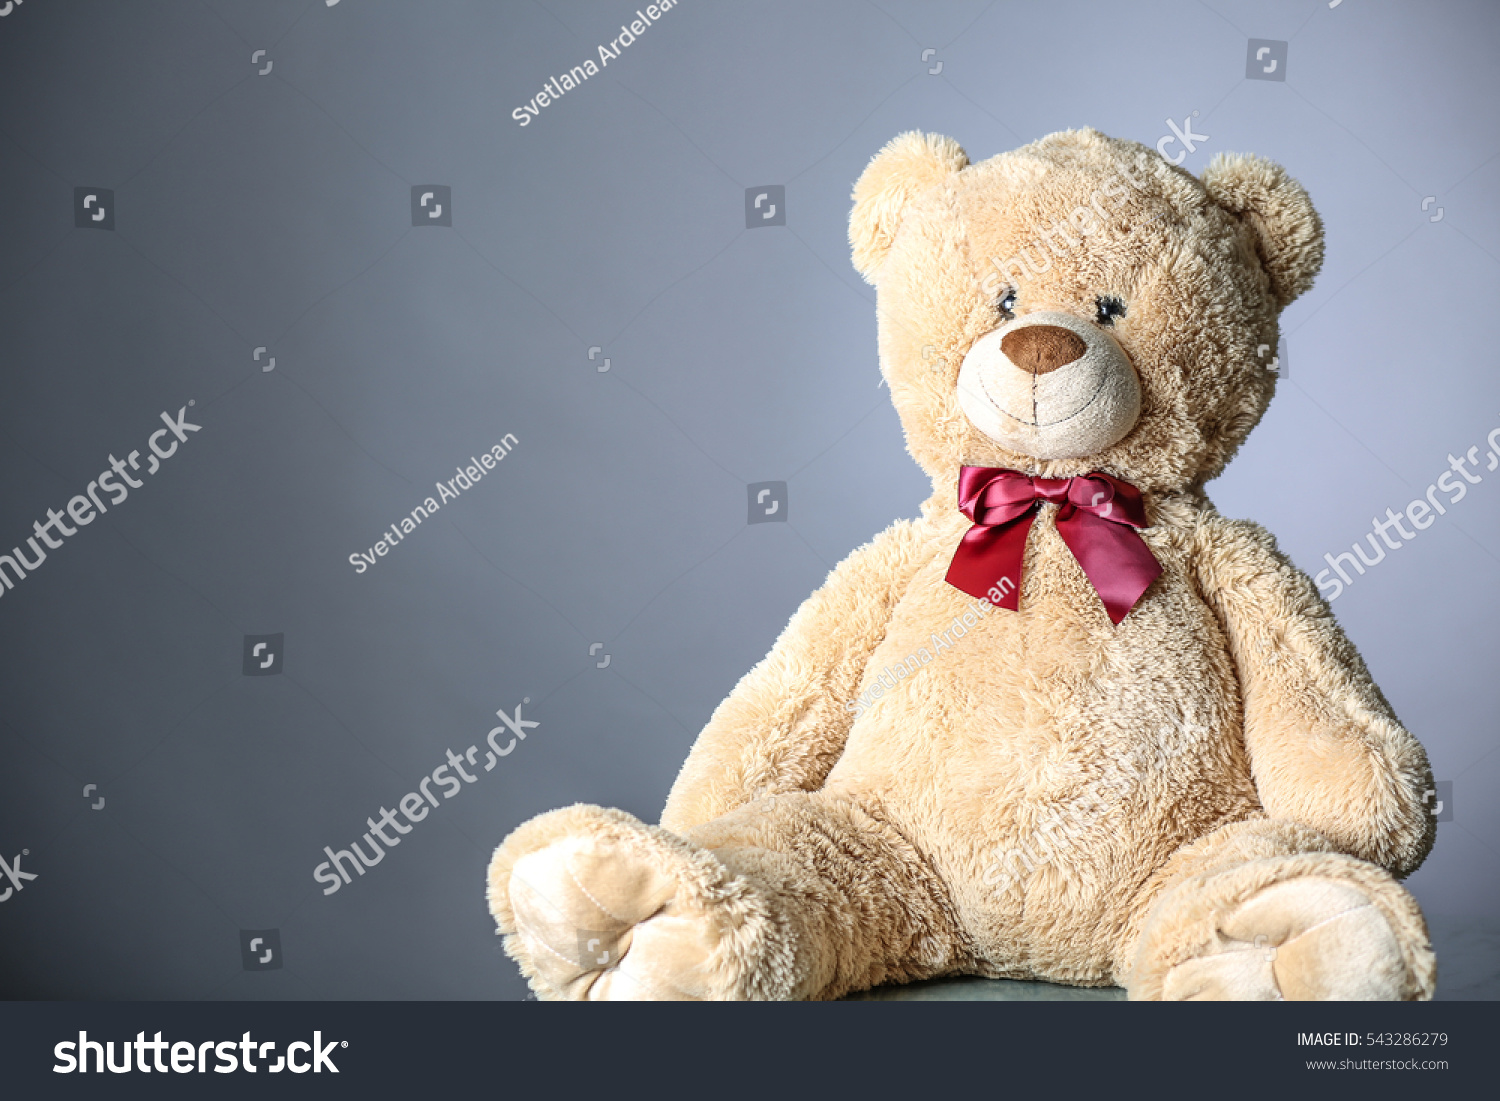 teddy bear red bow tie